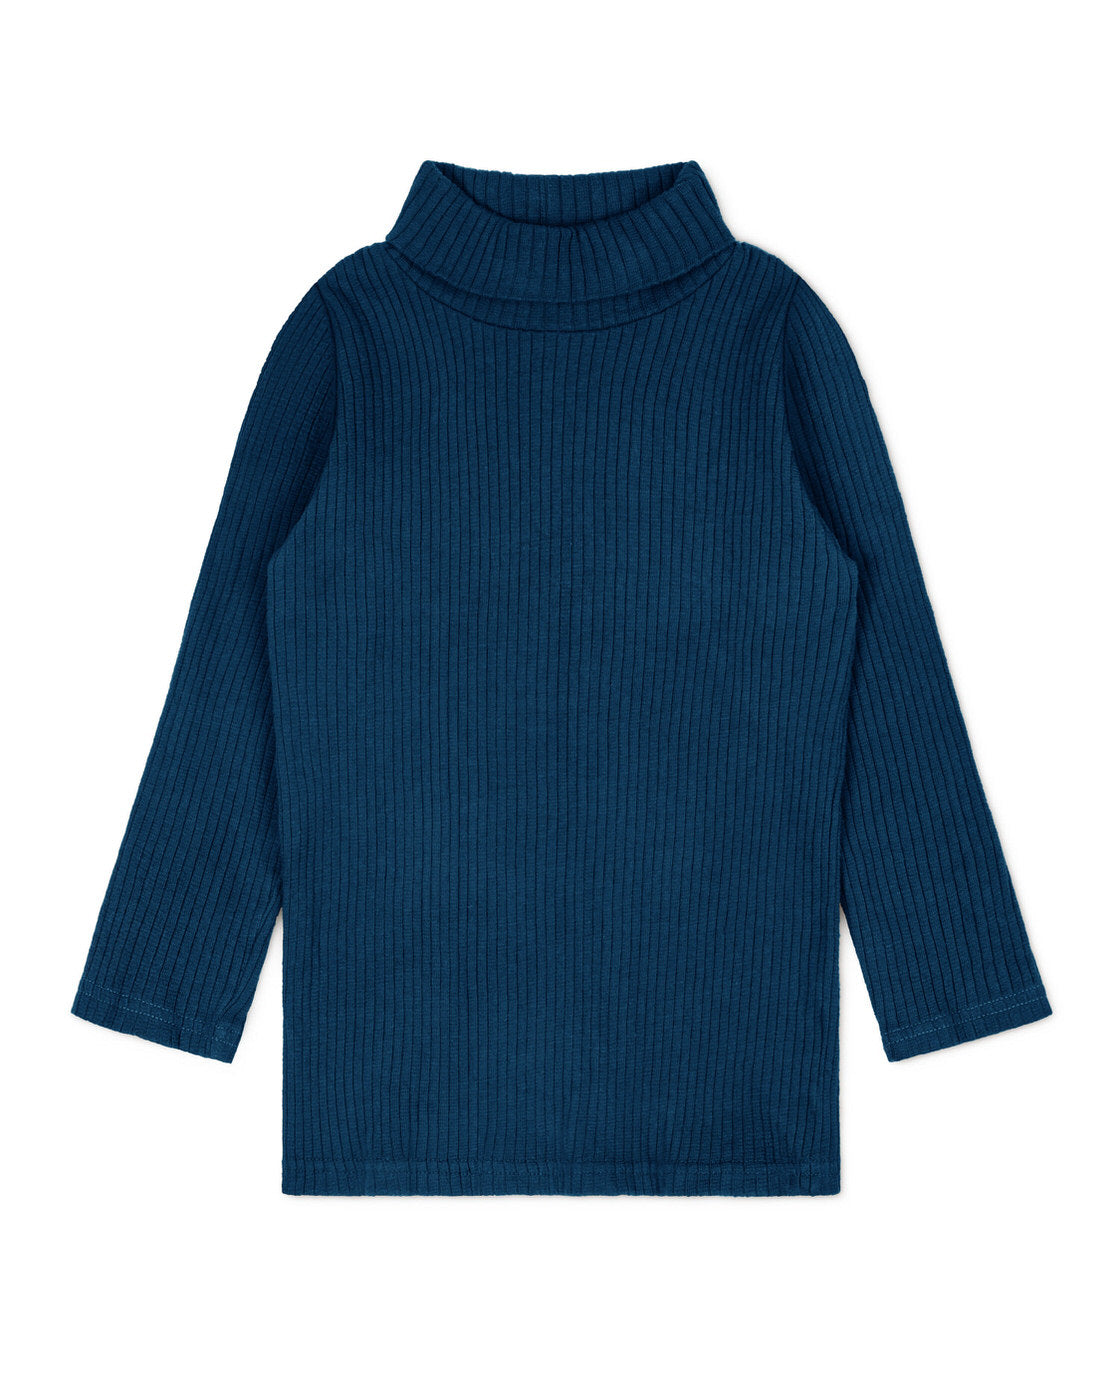 Dark blue turtleneck sweater made of organic cotton from Matona